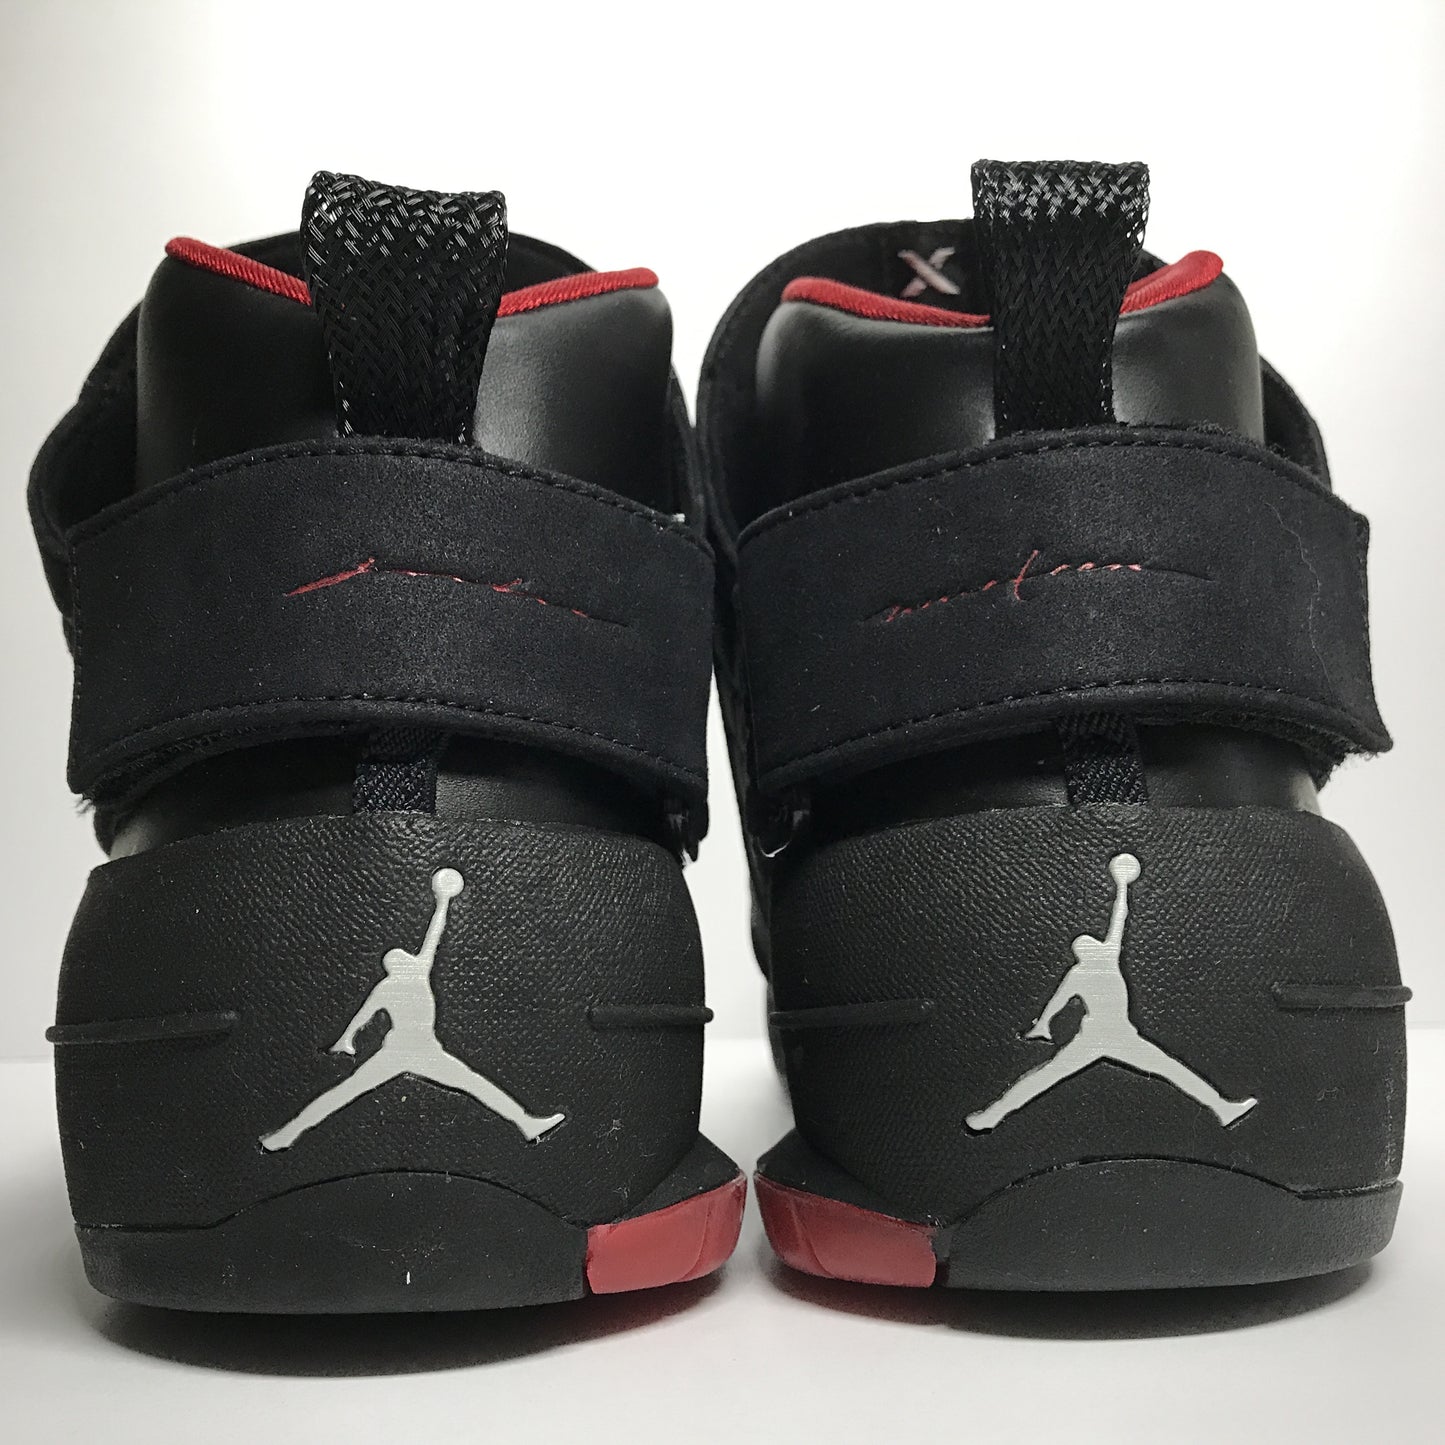 DS Nike Air Jordan 19 XIX CDP Black/Red Size 9